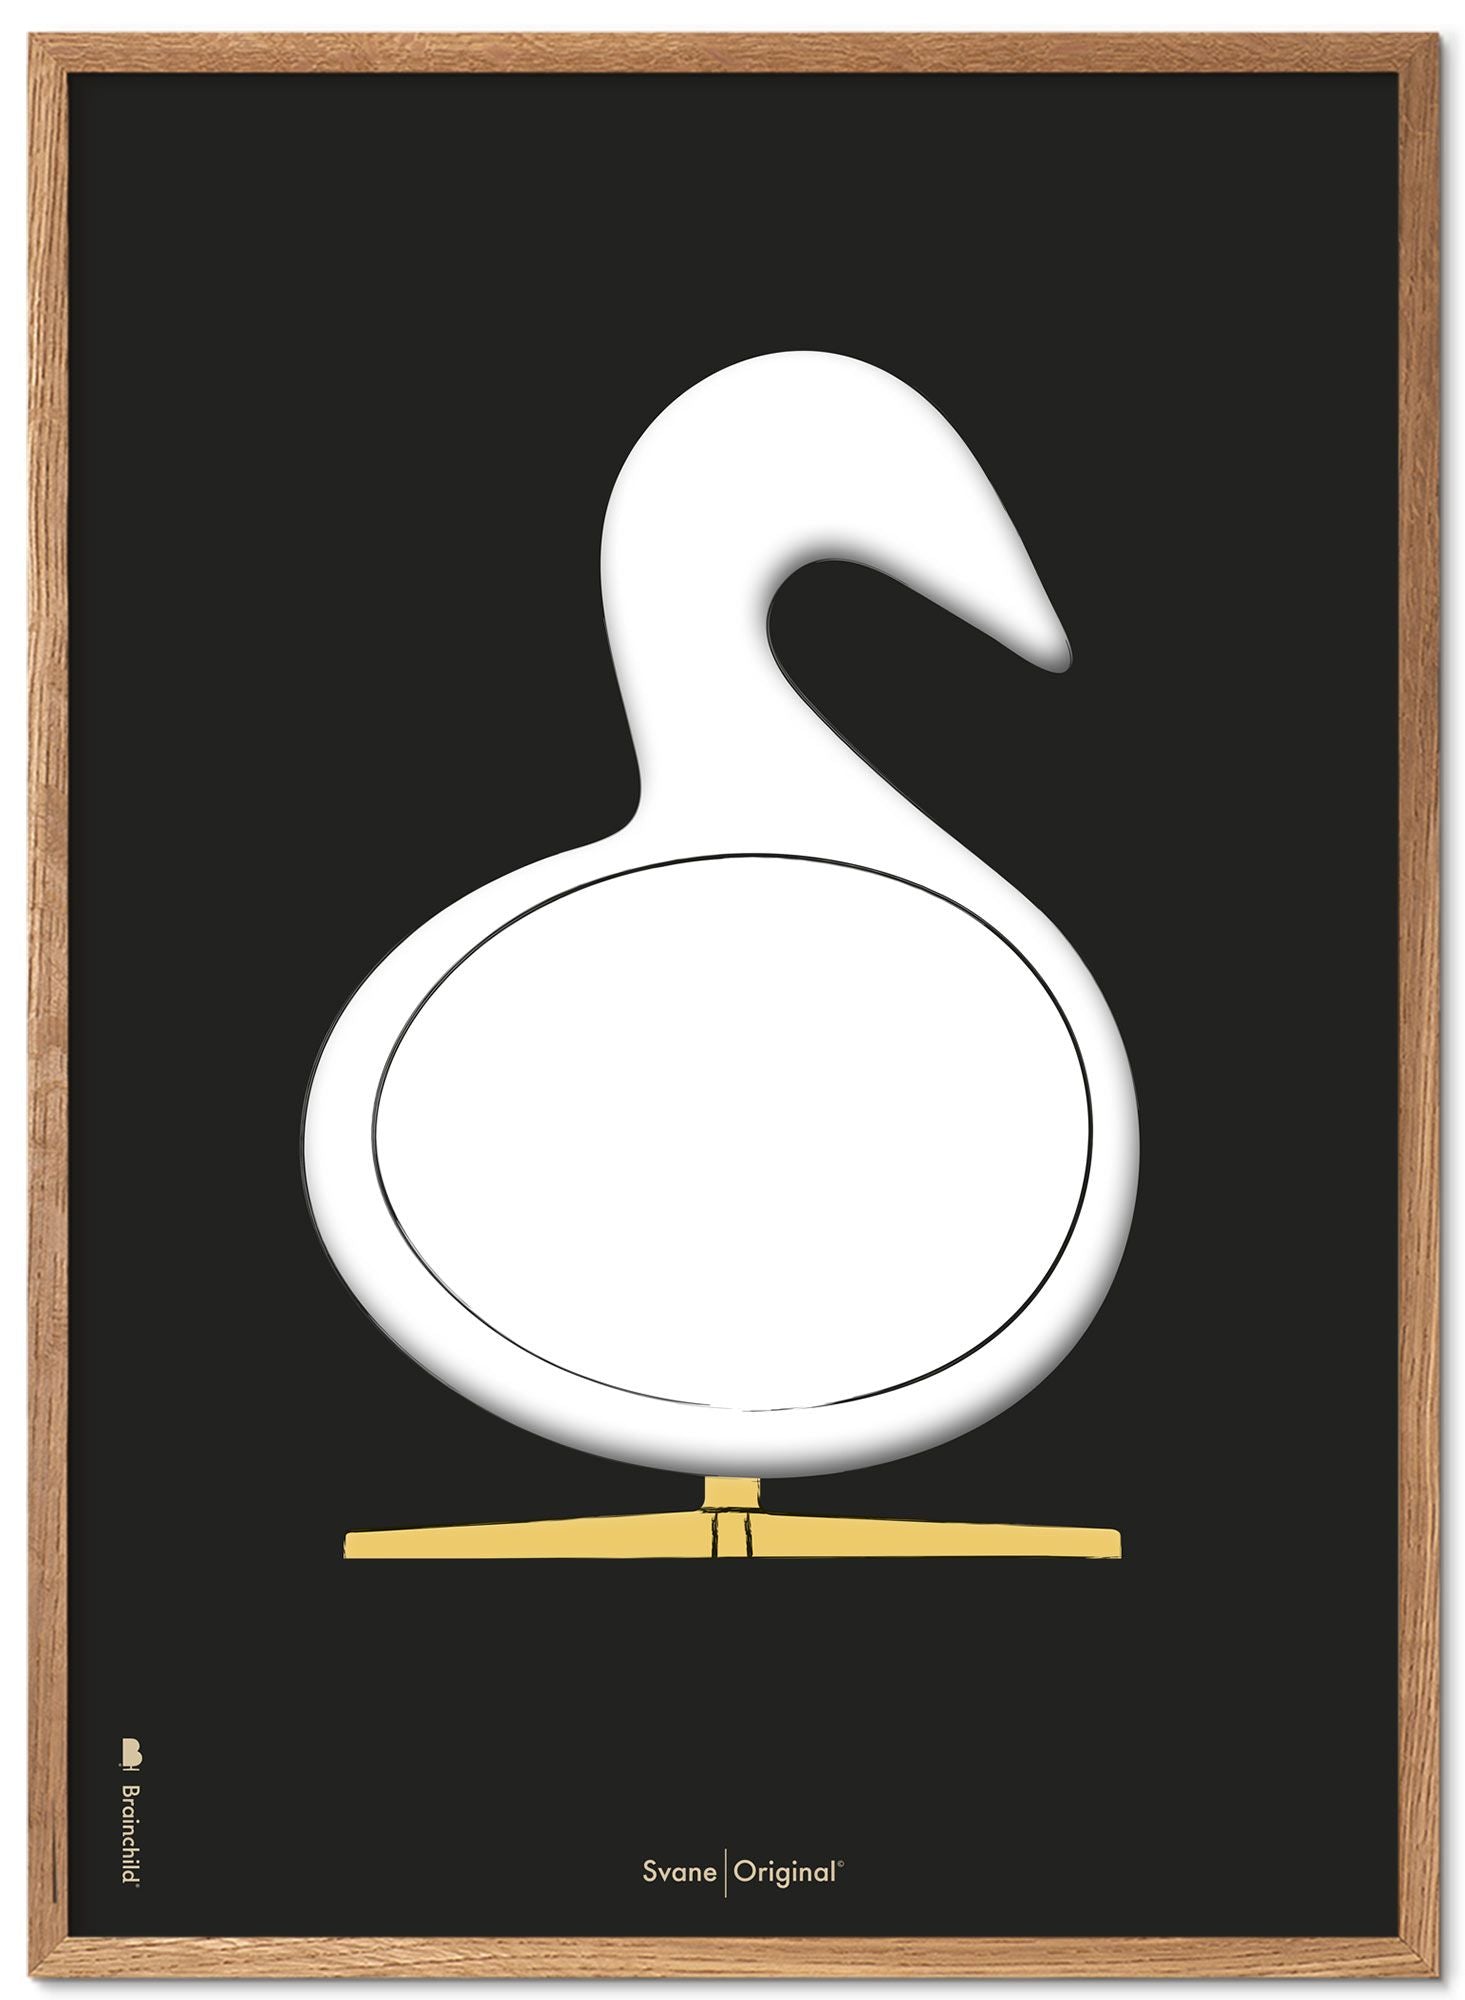 Brainchild Swan Design Sketch Poster Frame Made Of Light Wood 70x100 Cm, Black Background